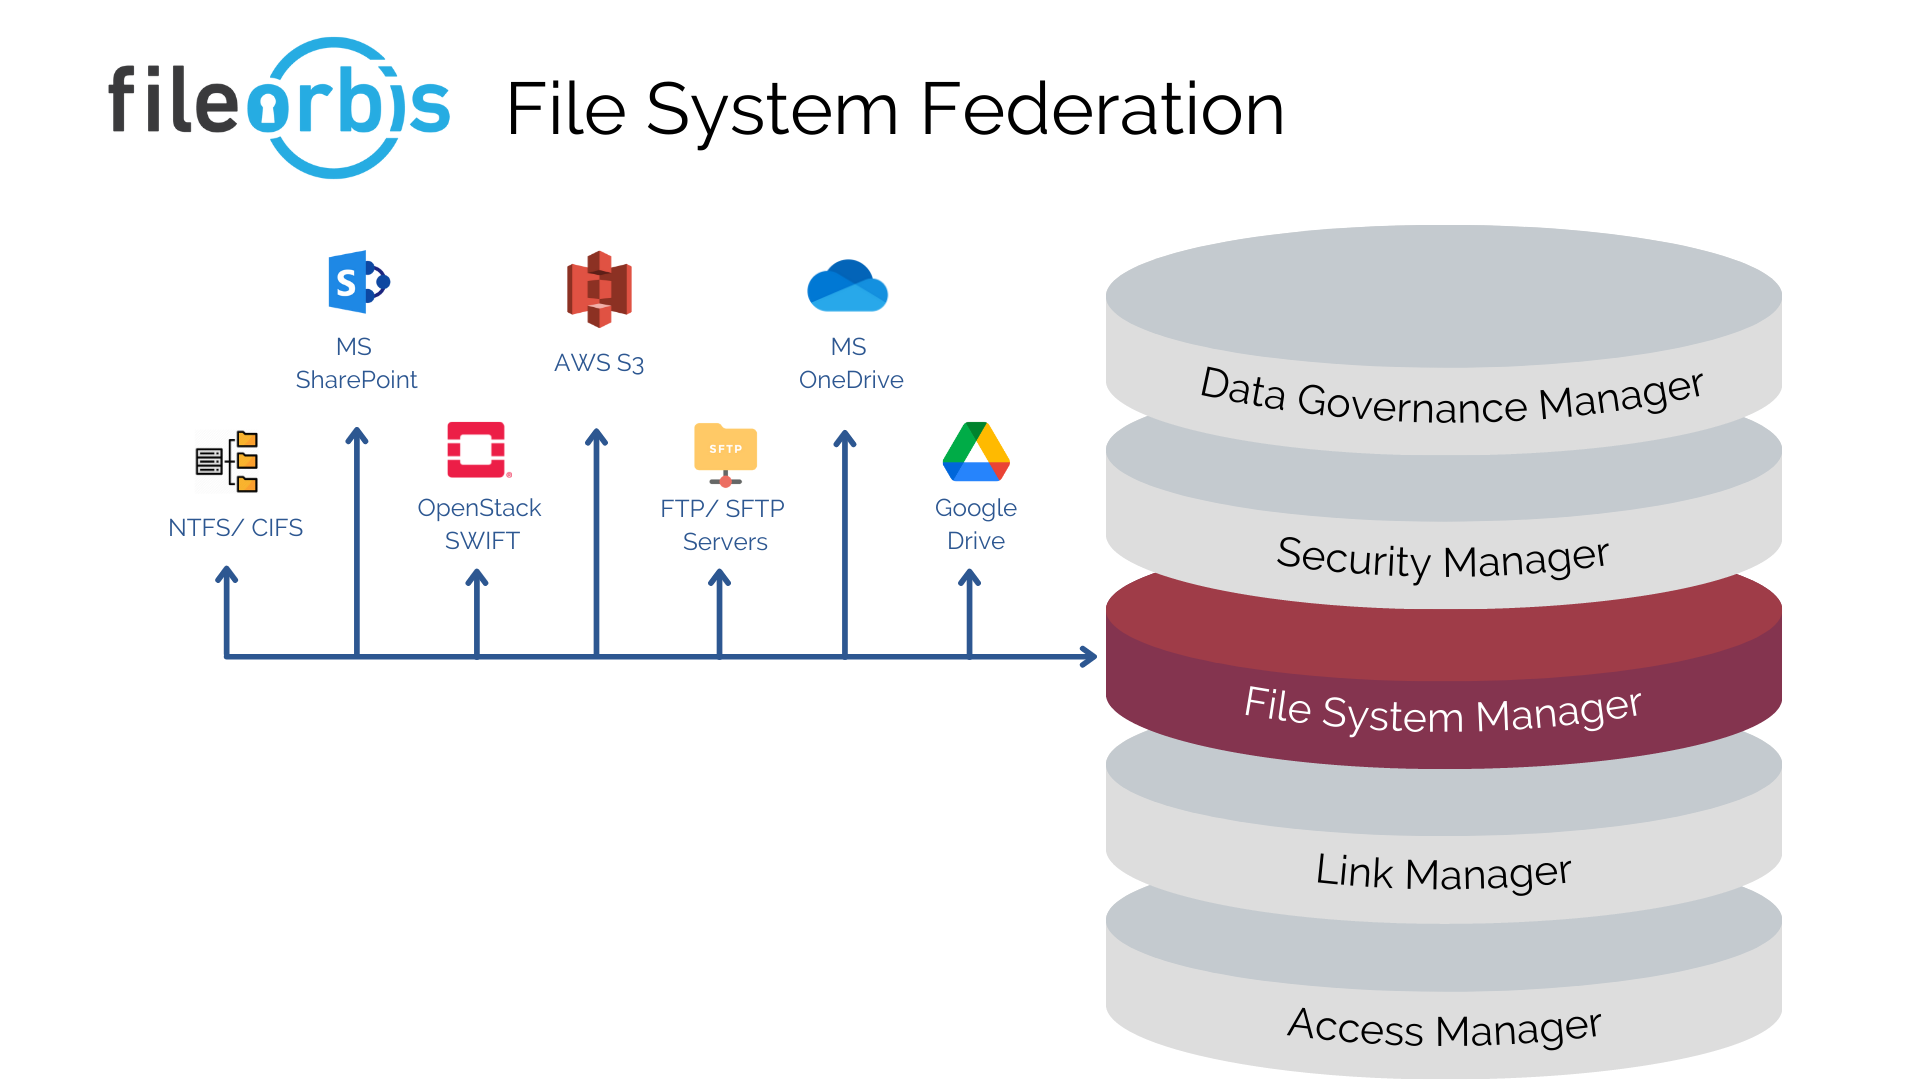 File System Federation version 2